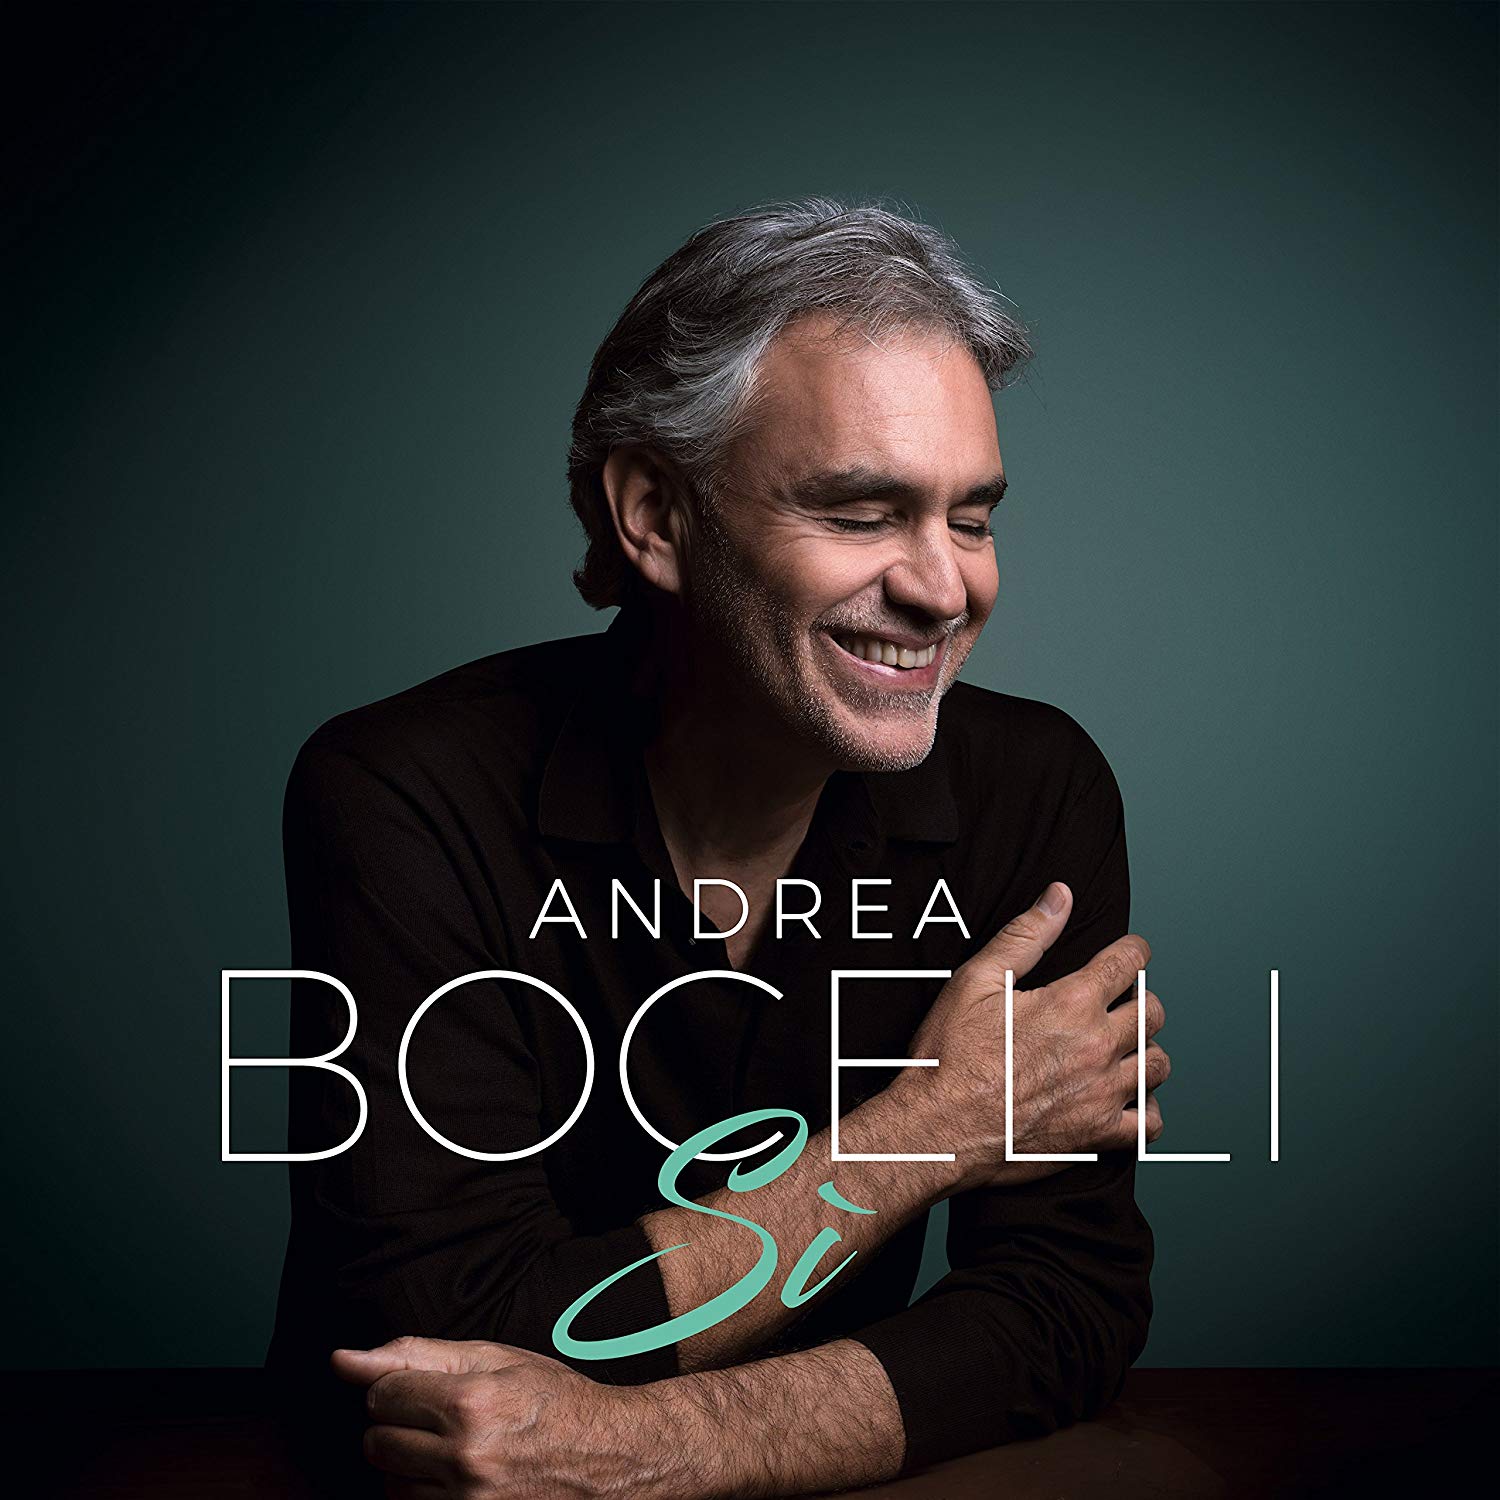 Andrea Bocelli at Golden 1 Center